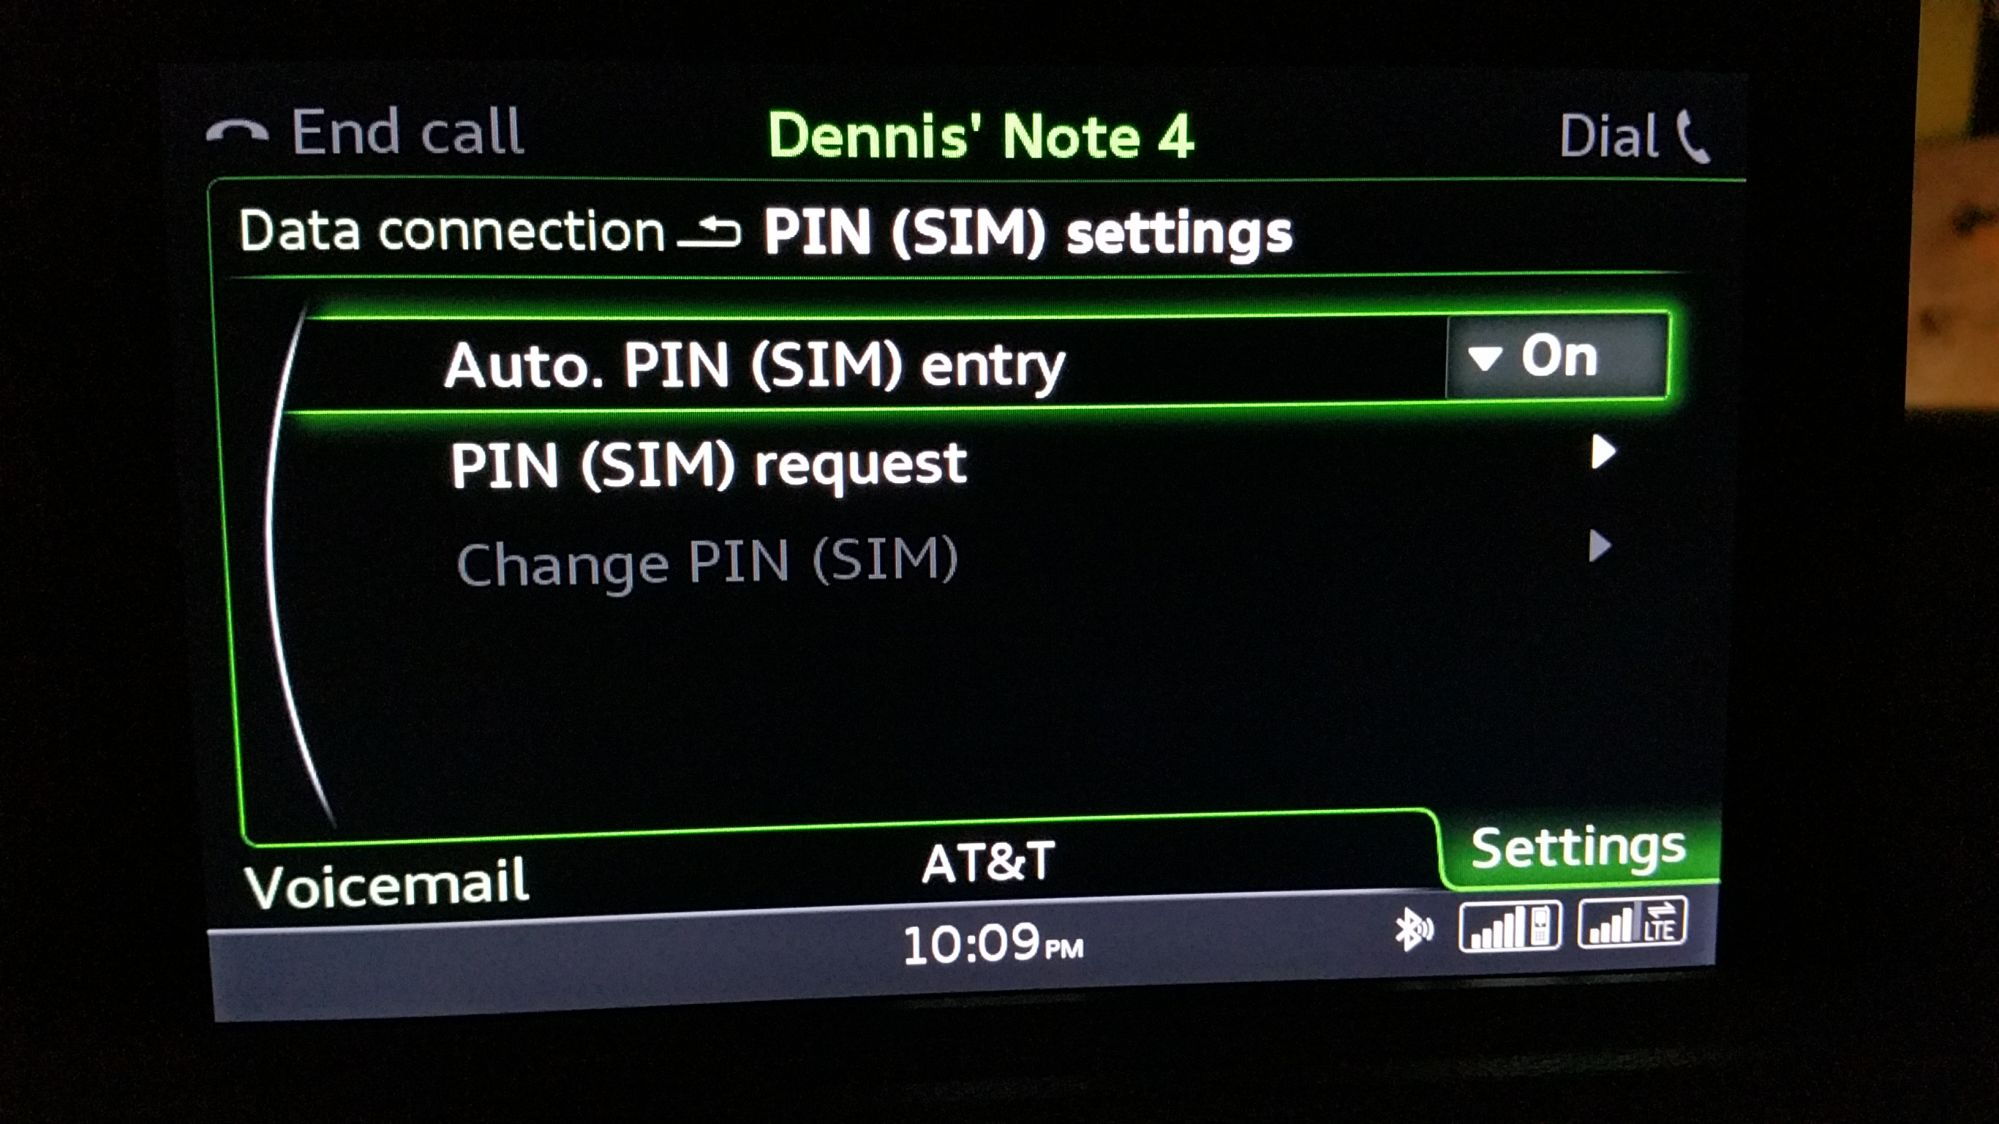 Set the PIN (SIM) settings as shown.